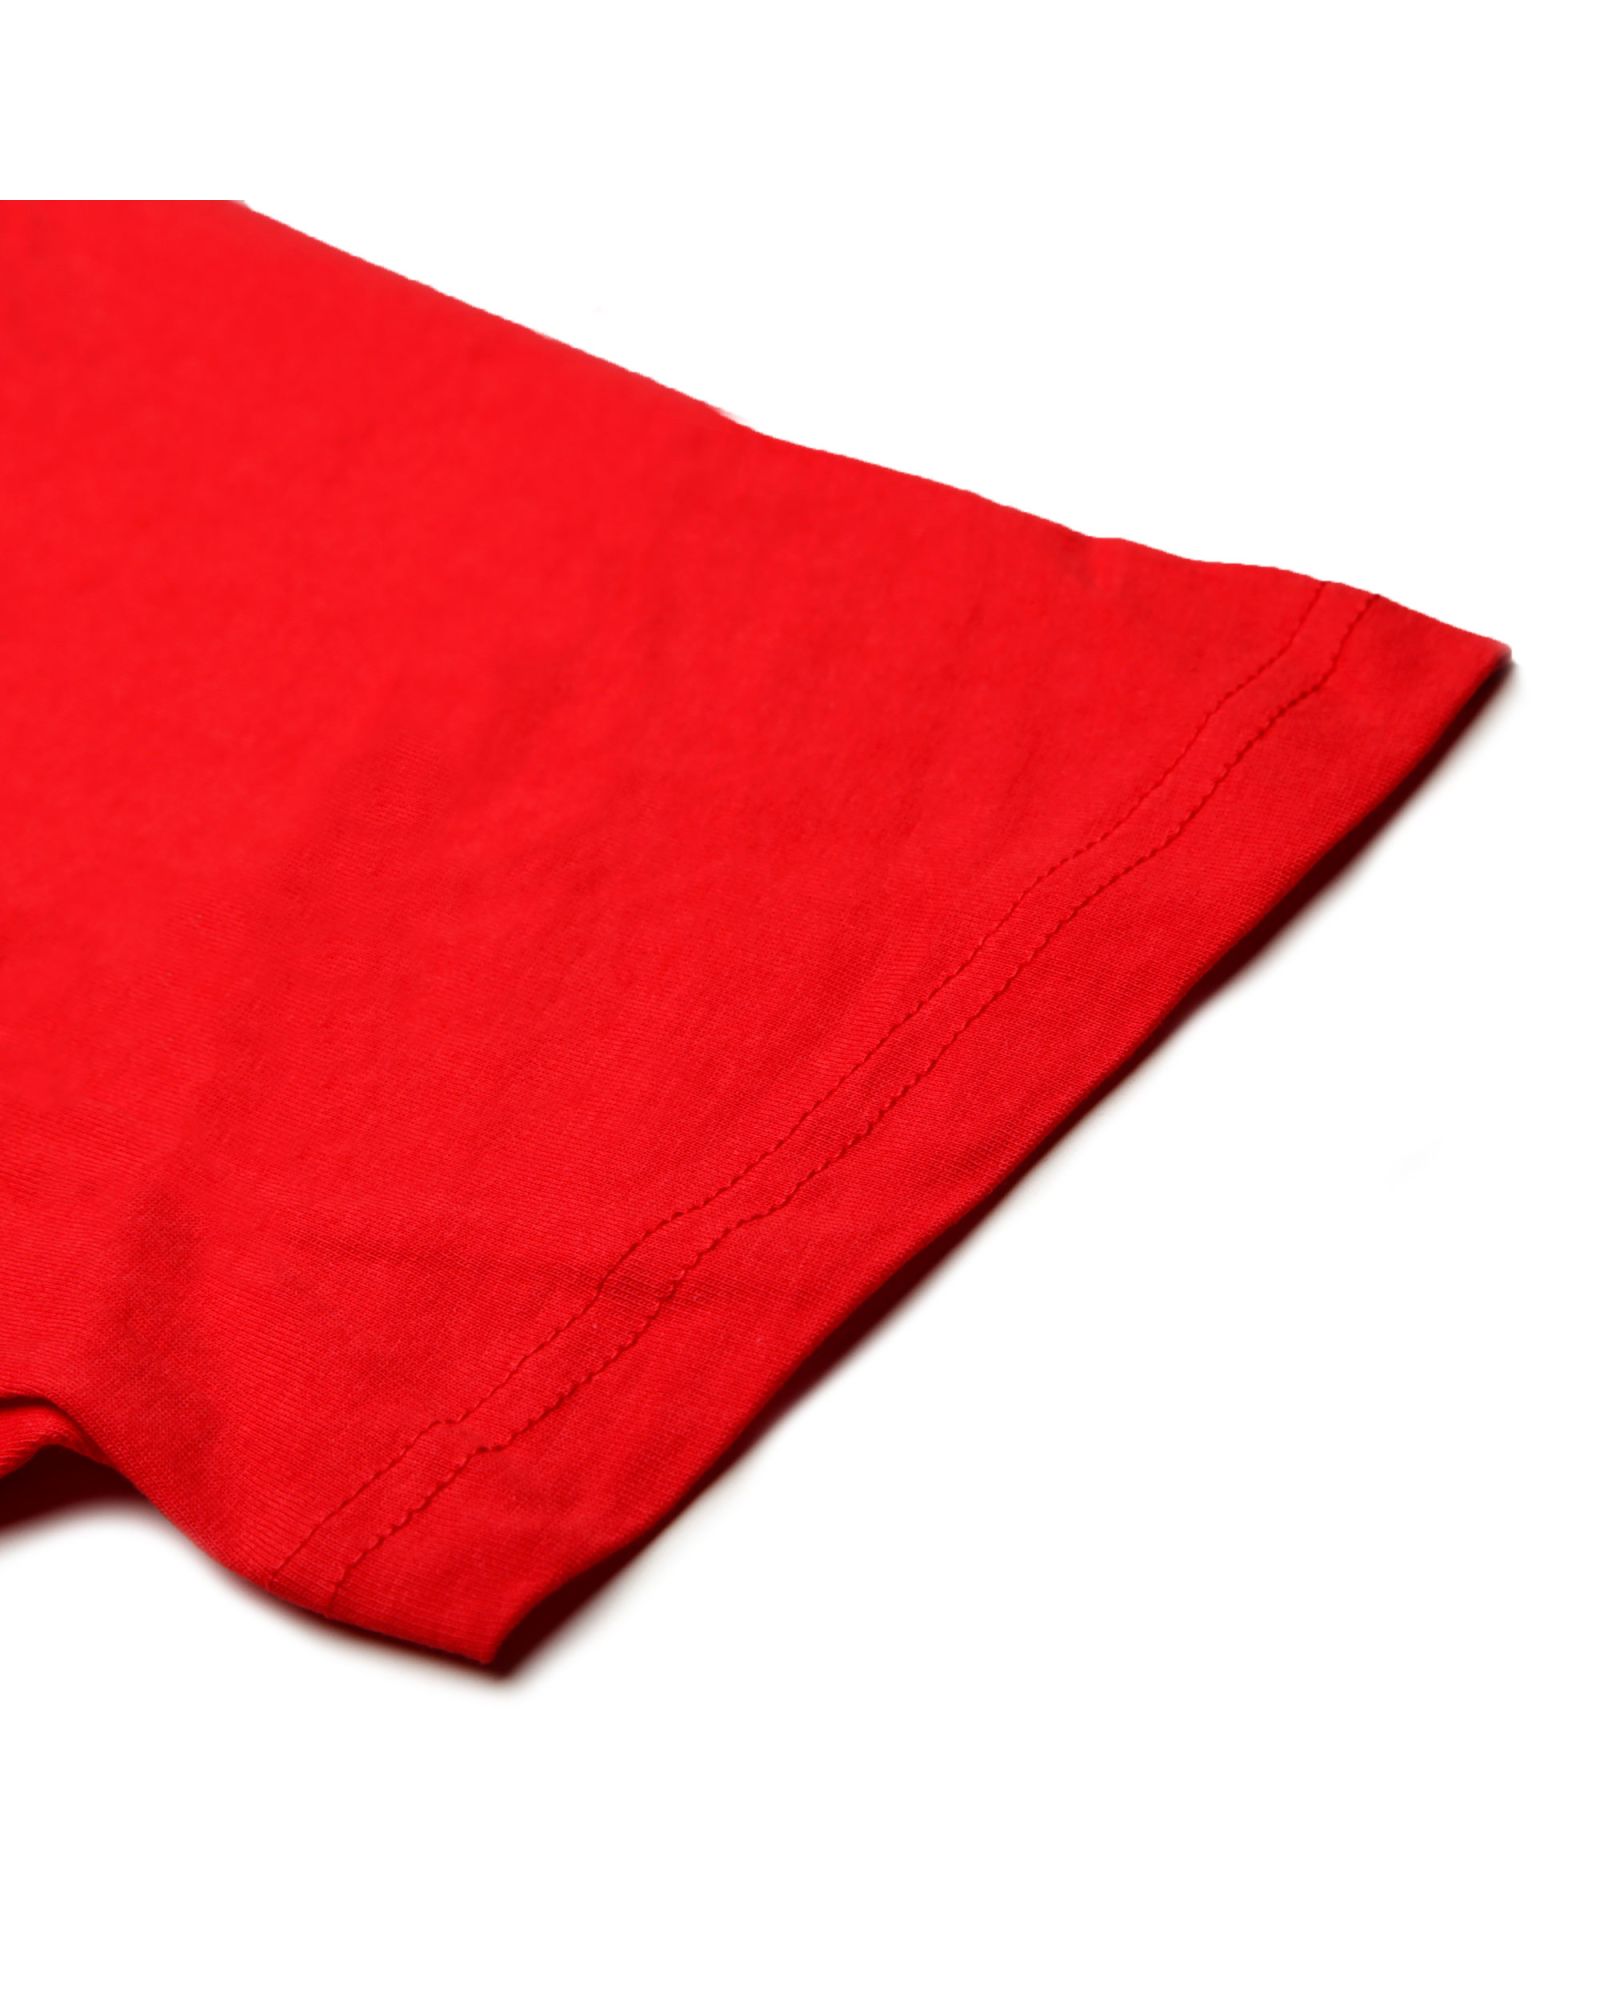 Camiseta de Paseo Print Grip Rojo - Fútbol Factory